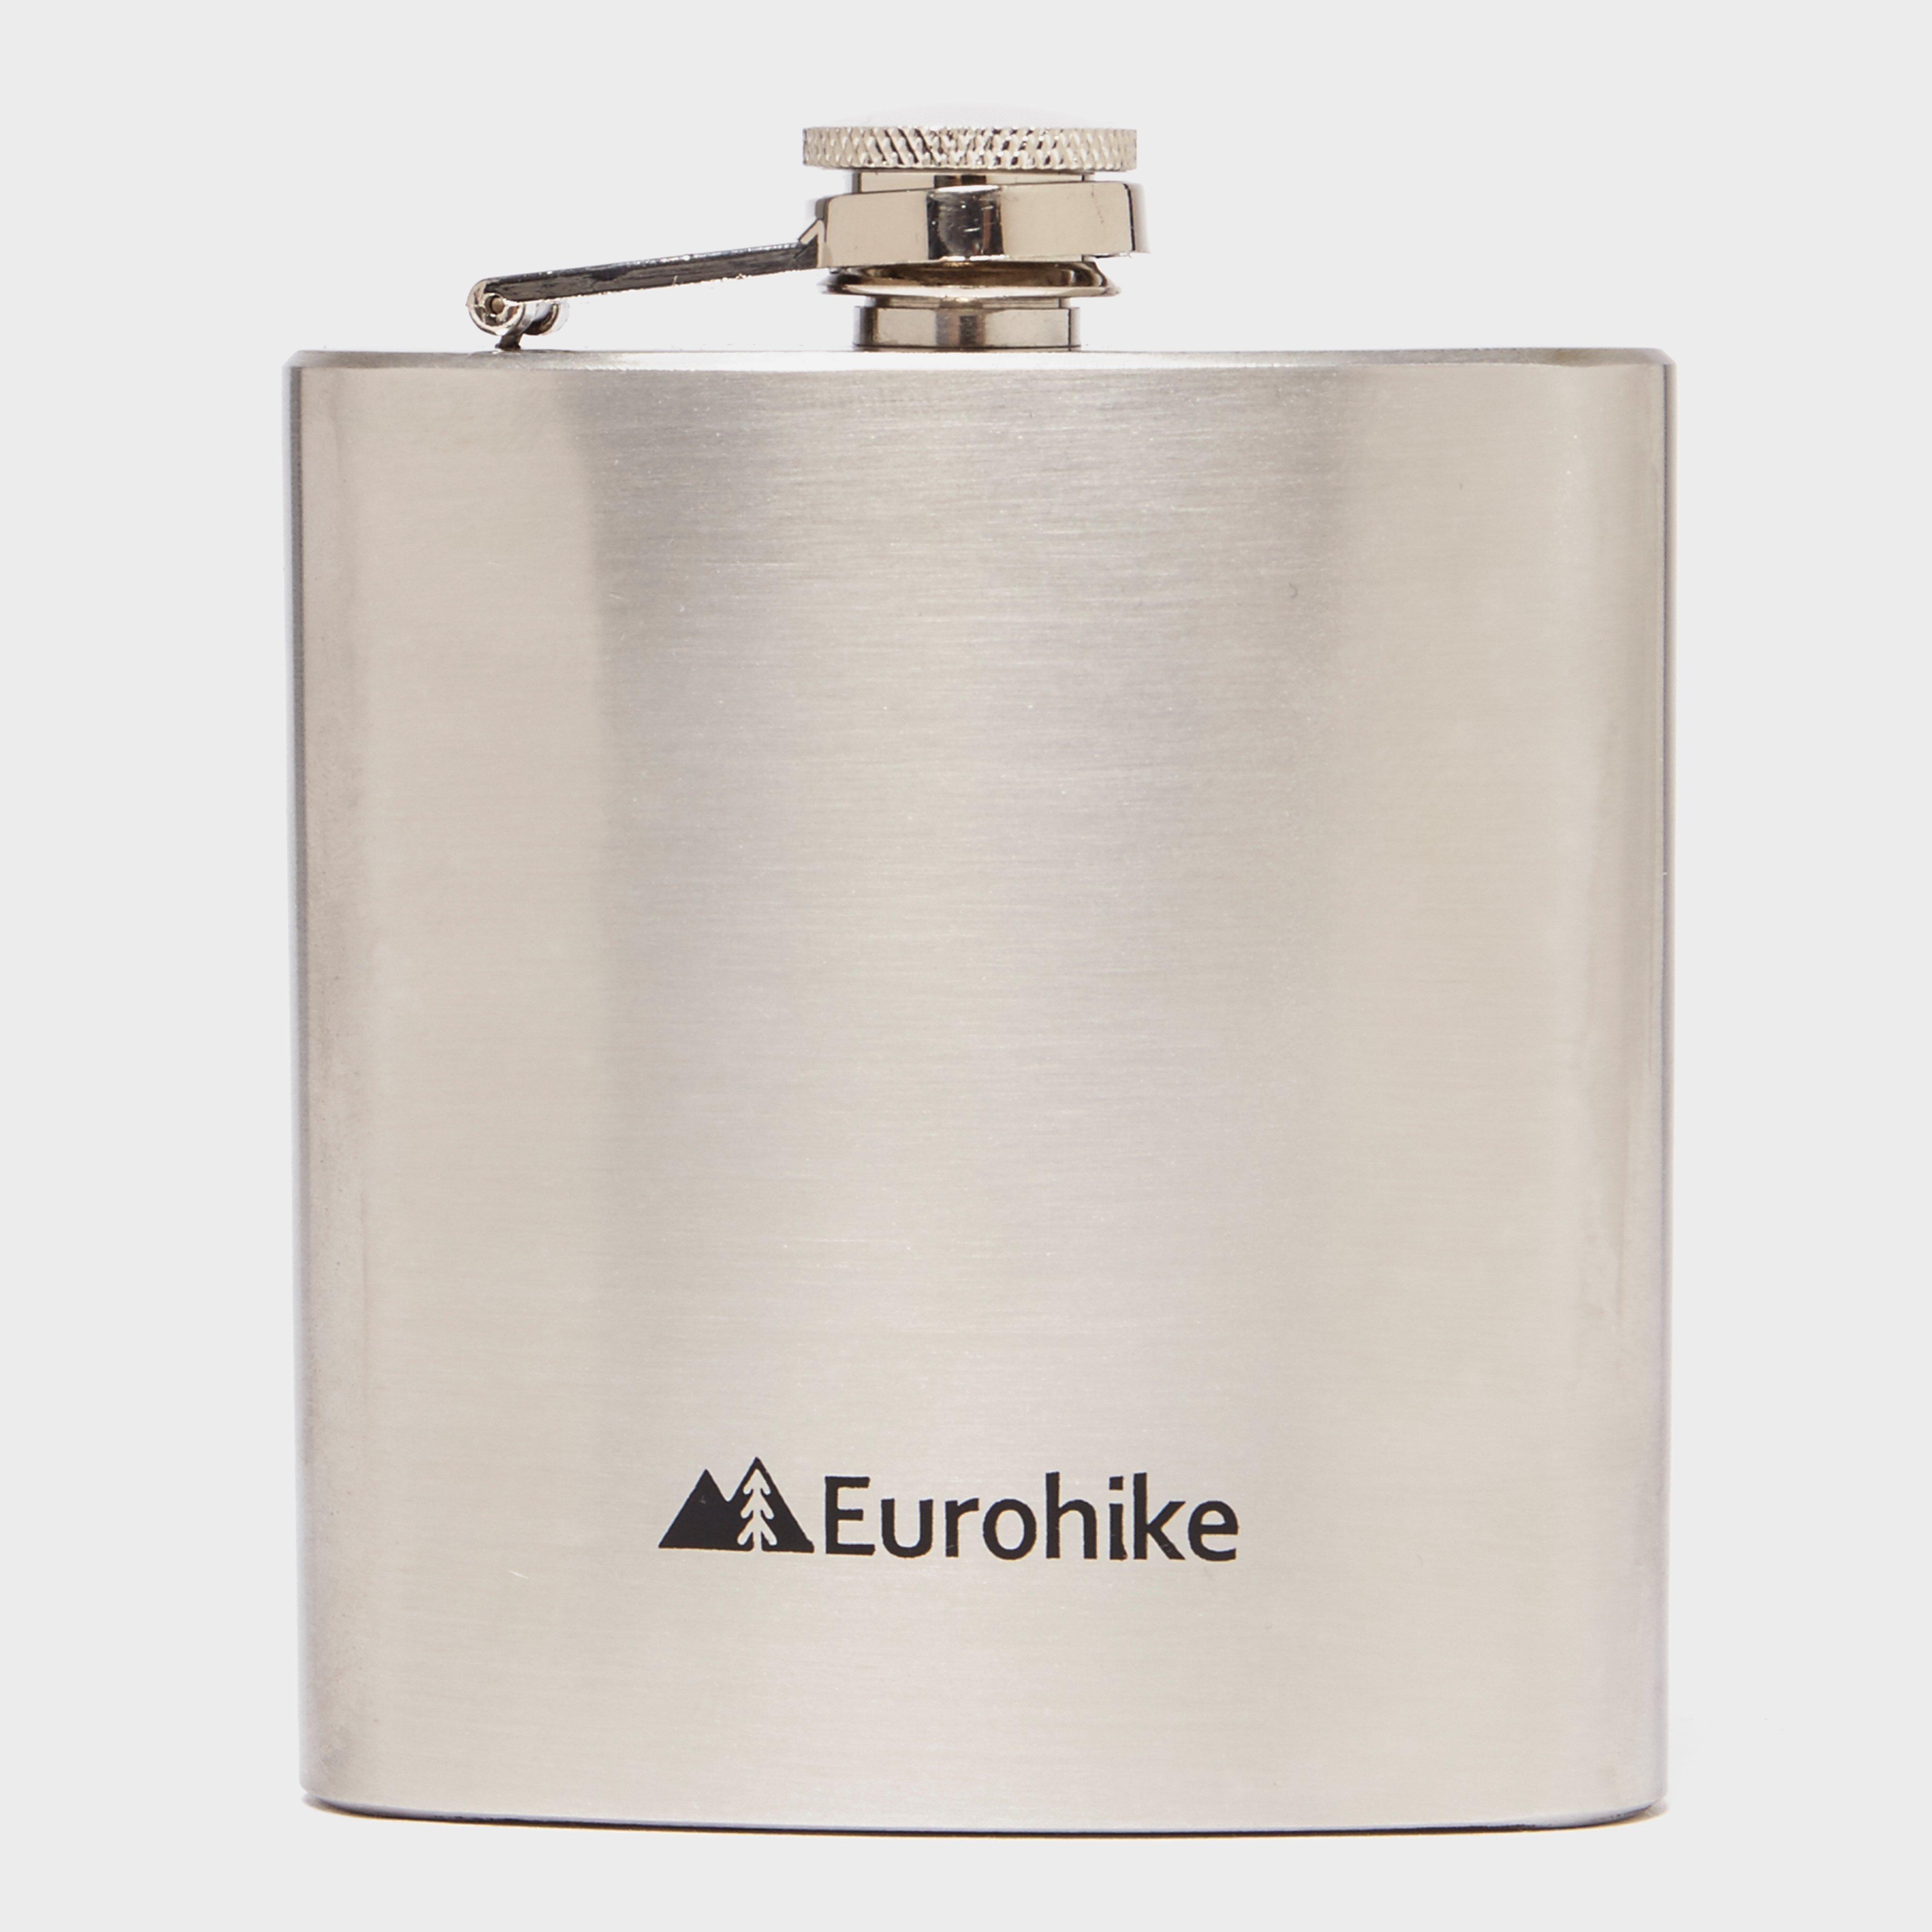 Eurohike Stainless Steel 0.6oz Hip Flask - Silver/slv  Silver/slv